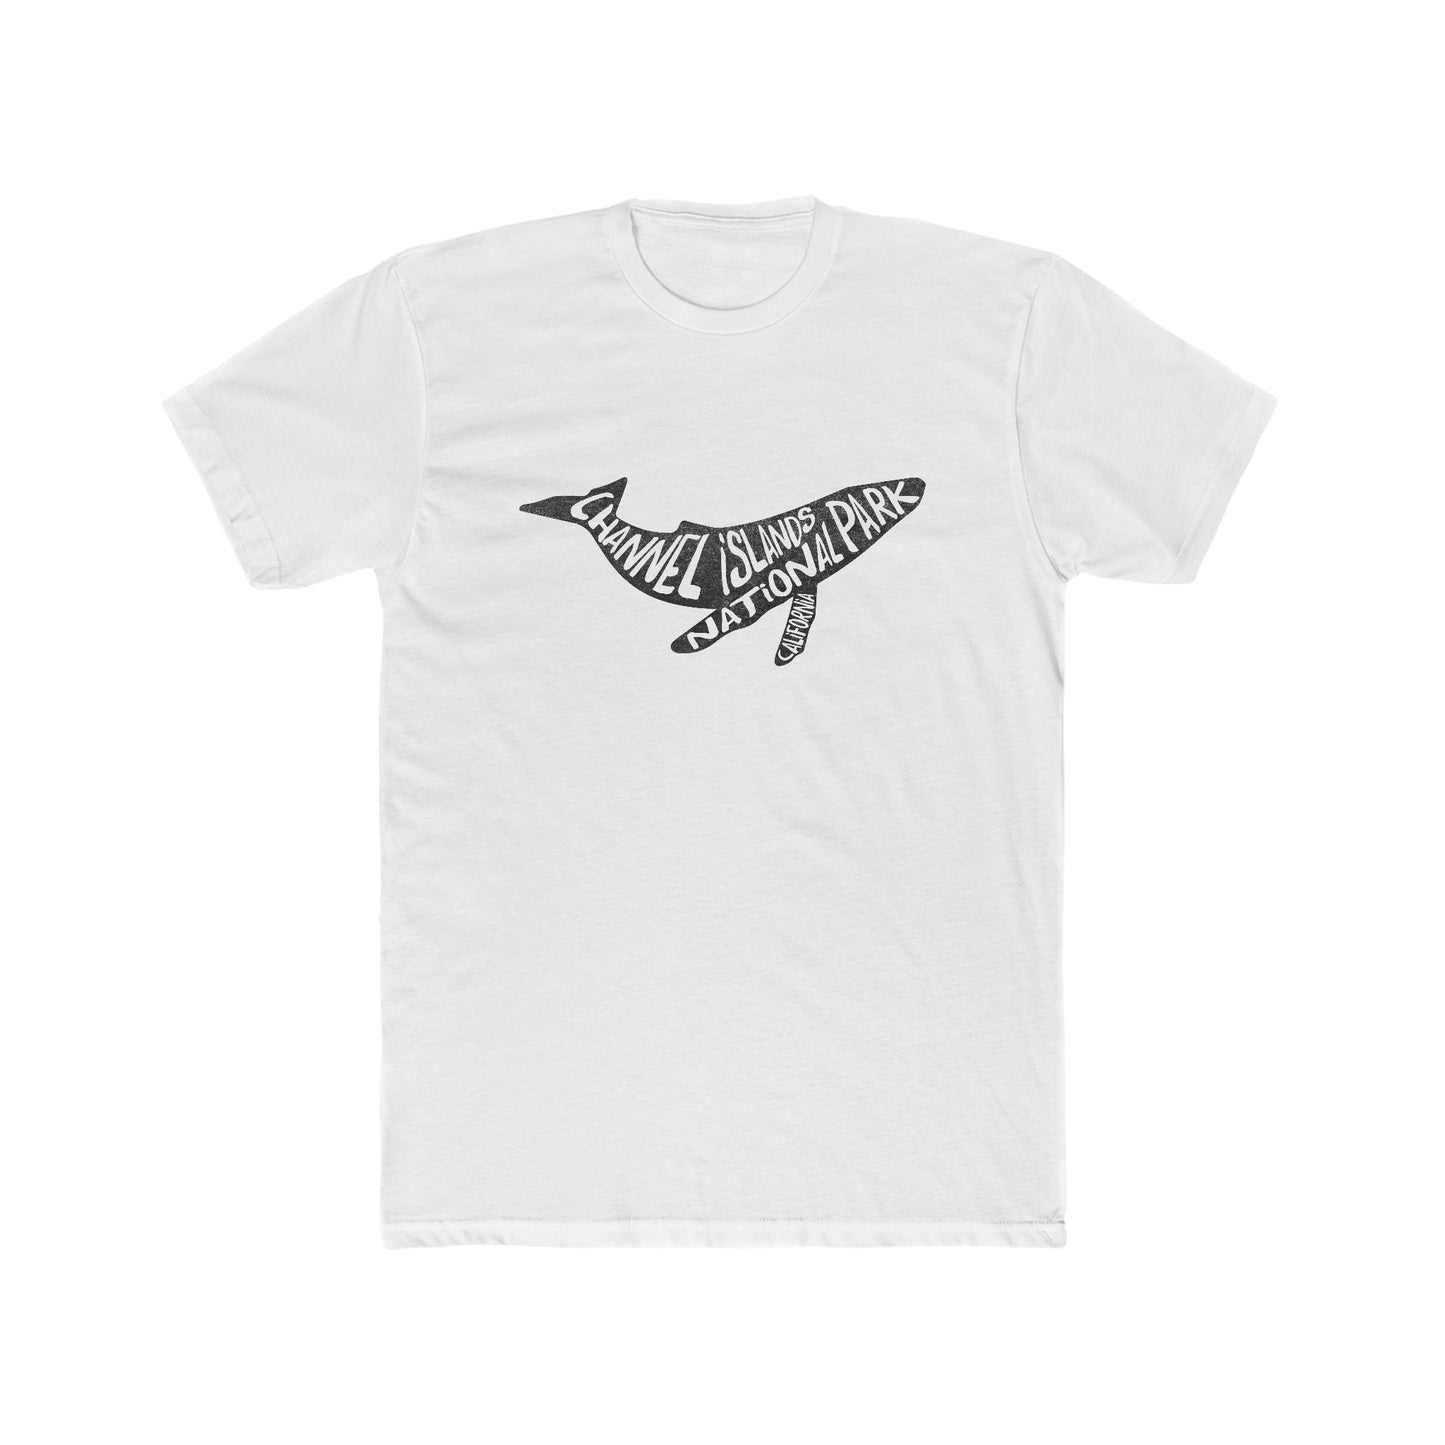 Channel Islands National Park T-Shirt - Humpback Whale